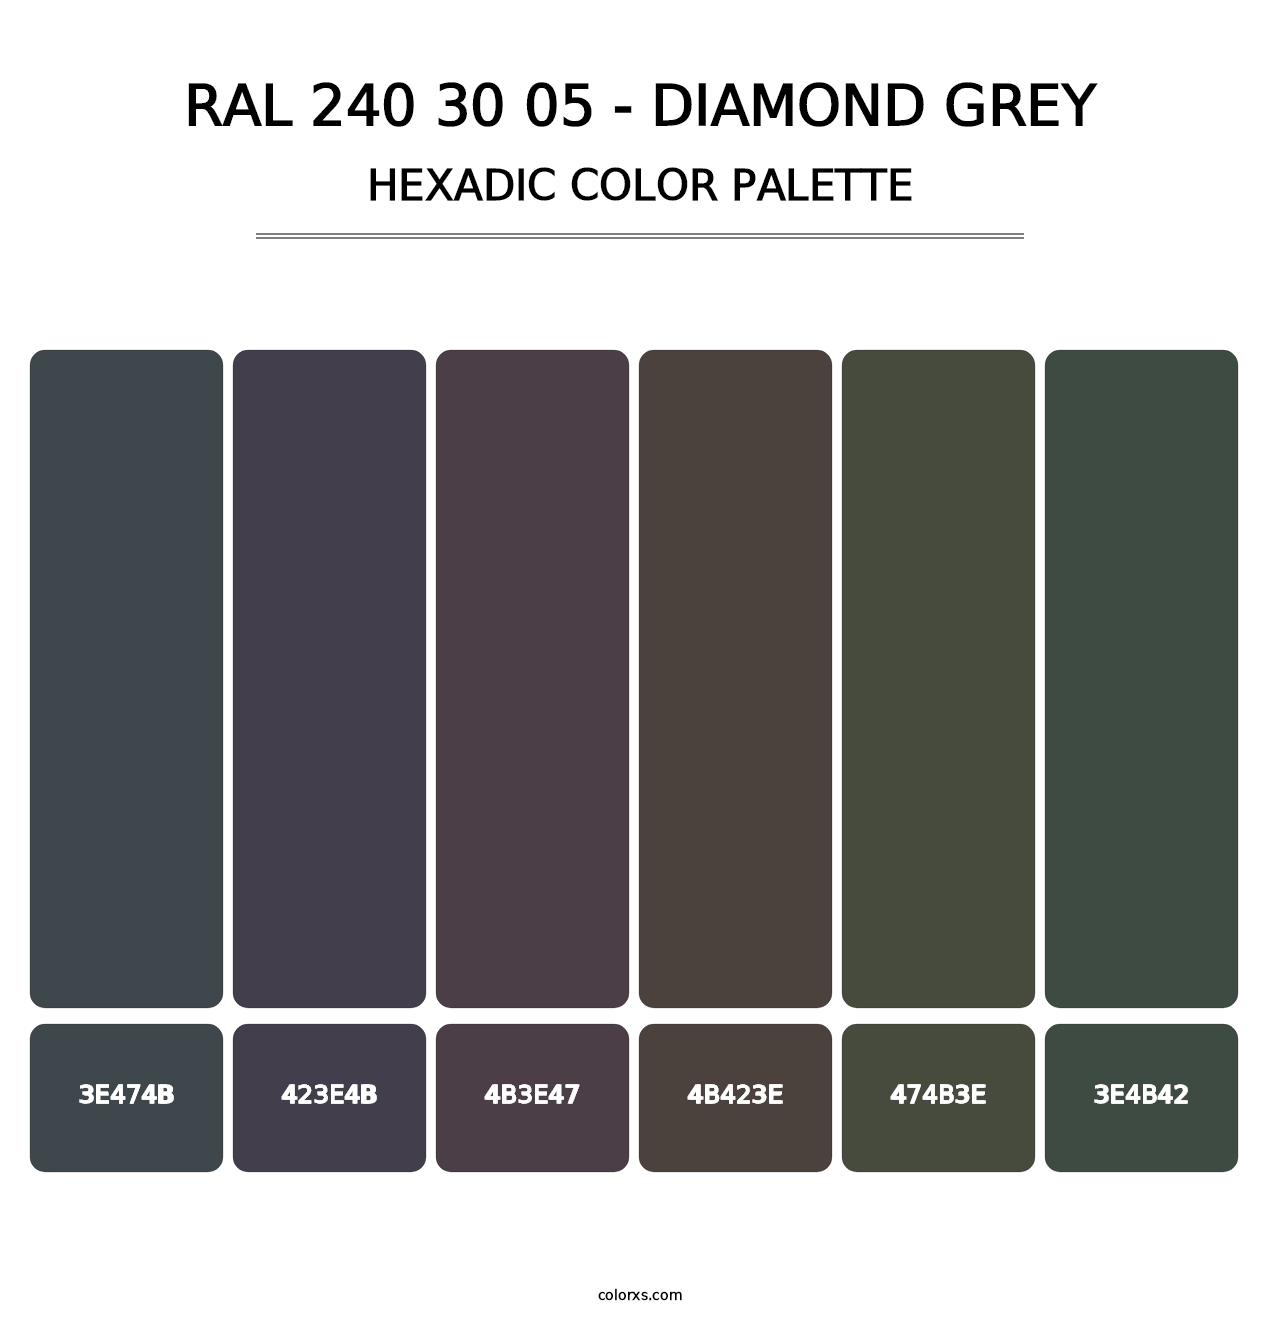 RAL 240 30 05 - Diamond Grey - Hexadic Color Palette